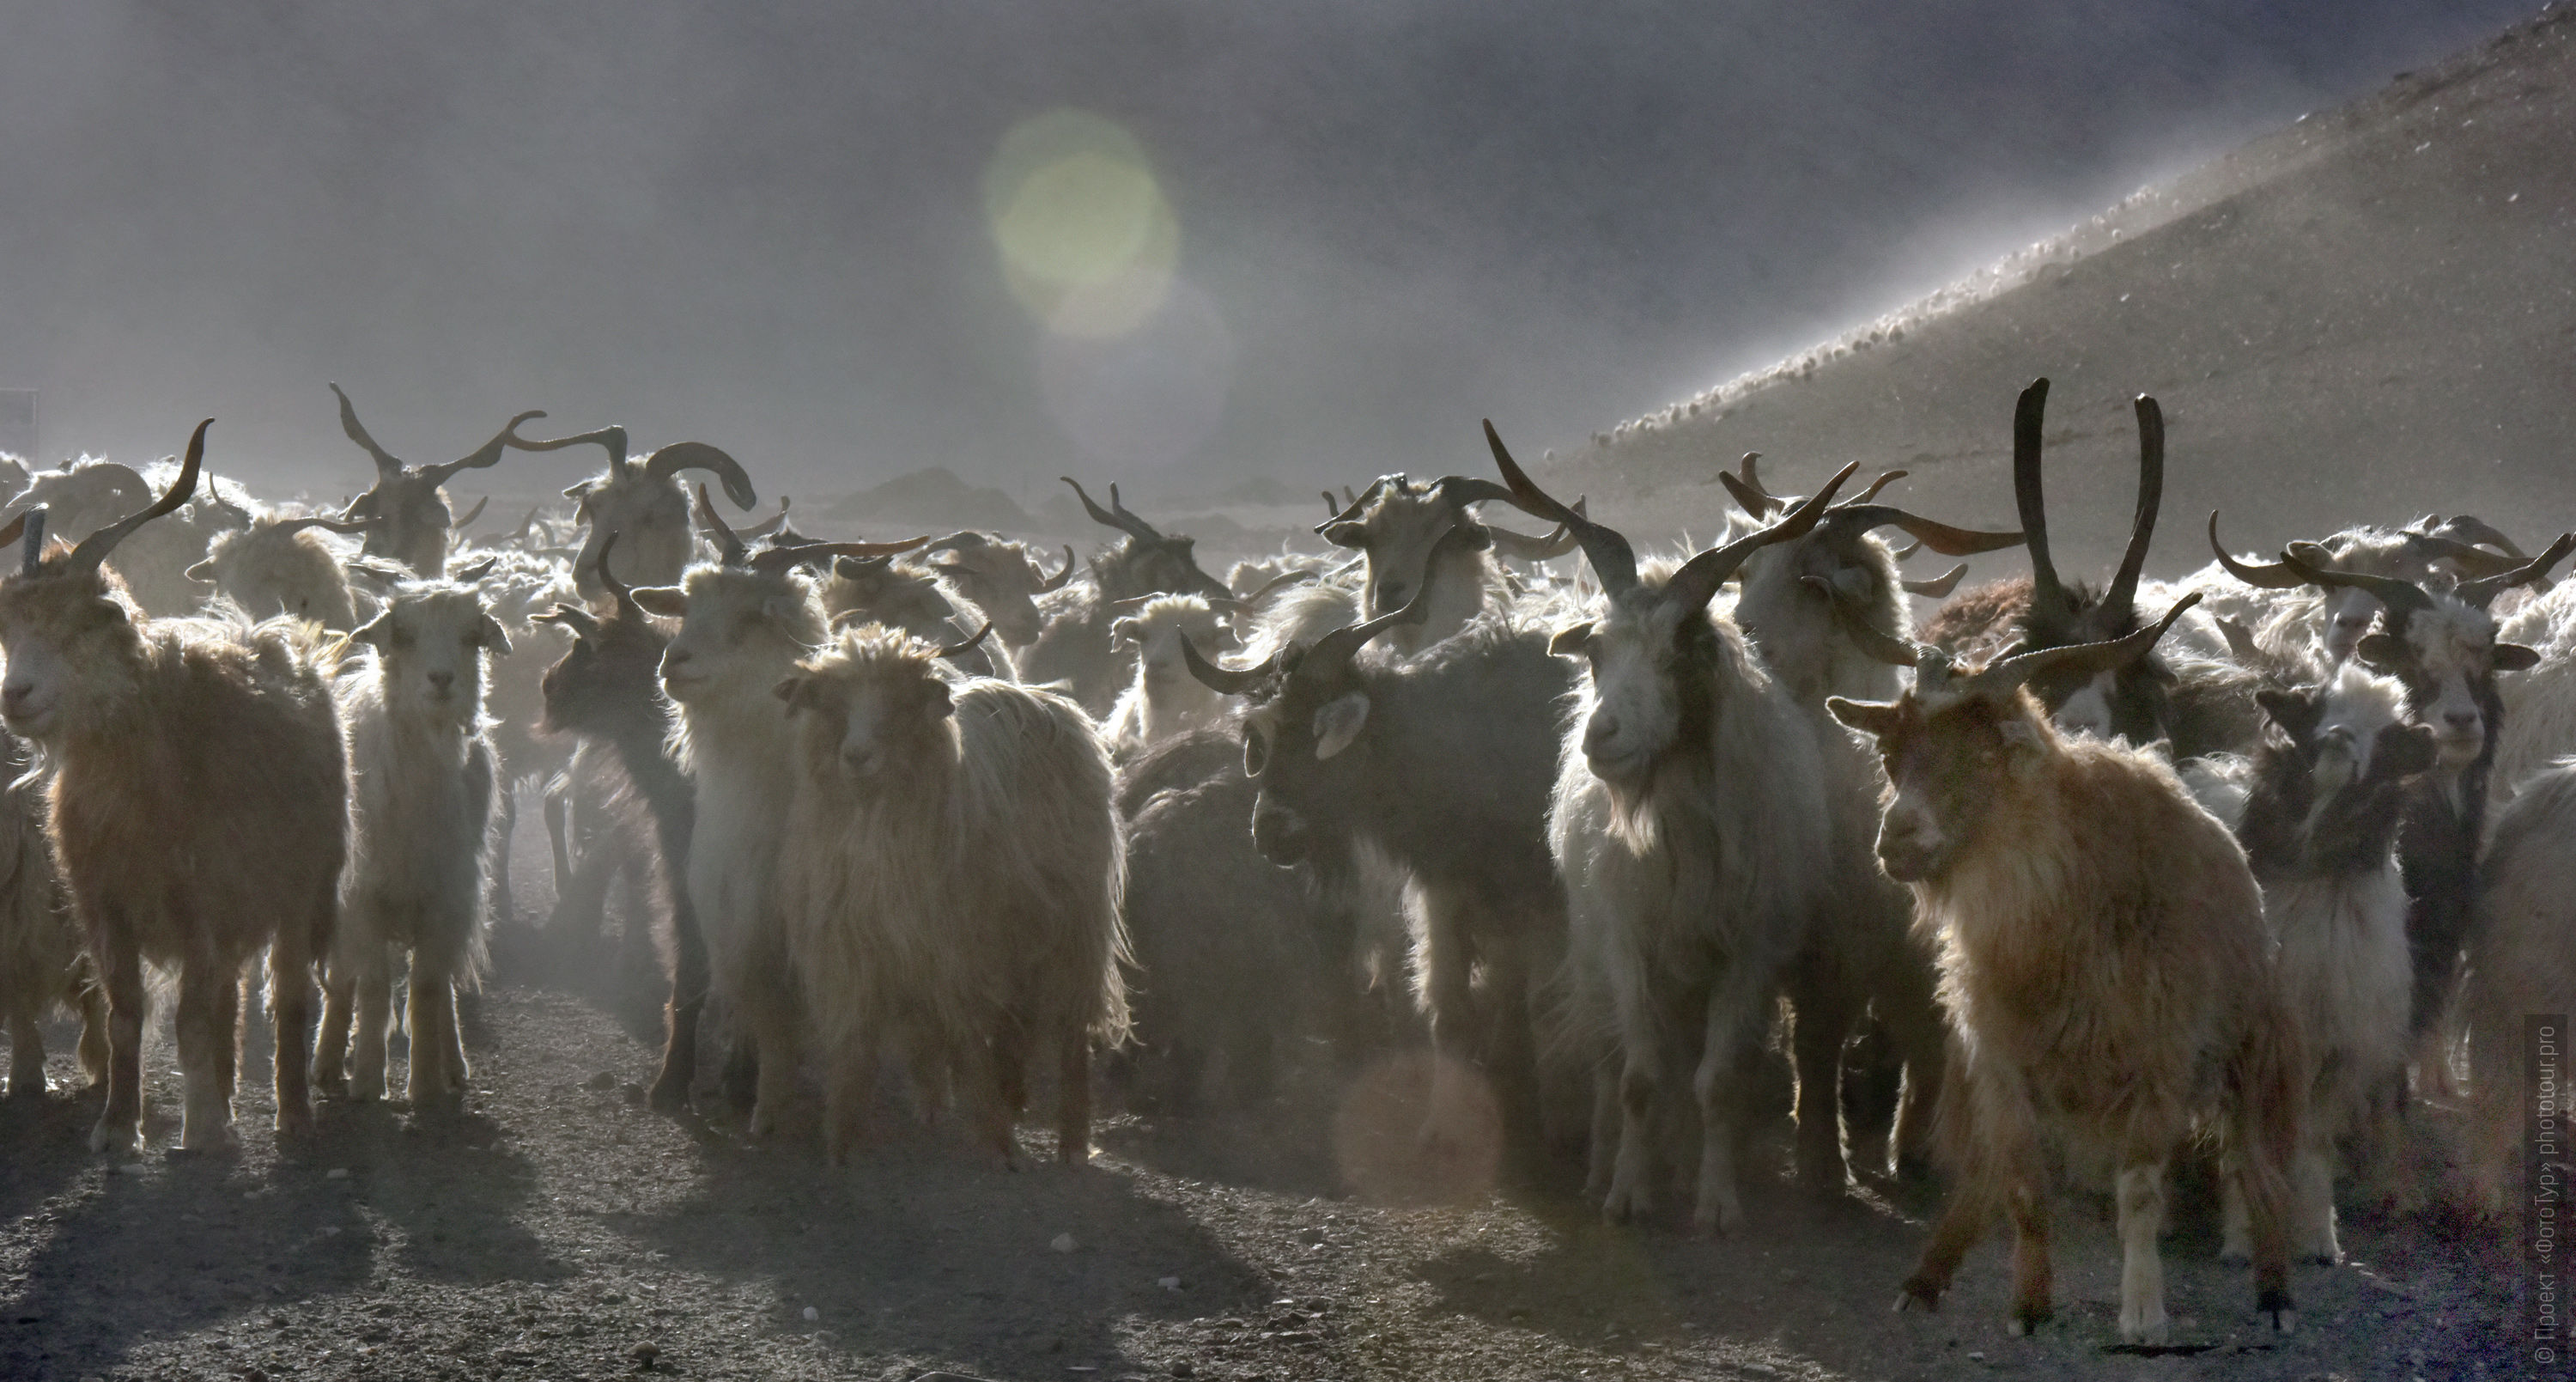 Ladakh goats and sheep, Ladakh women’s tour, August 31 - September 14, 2019.